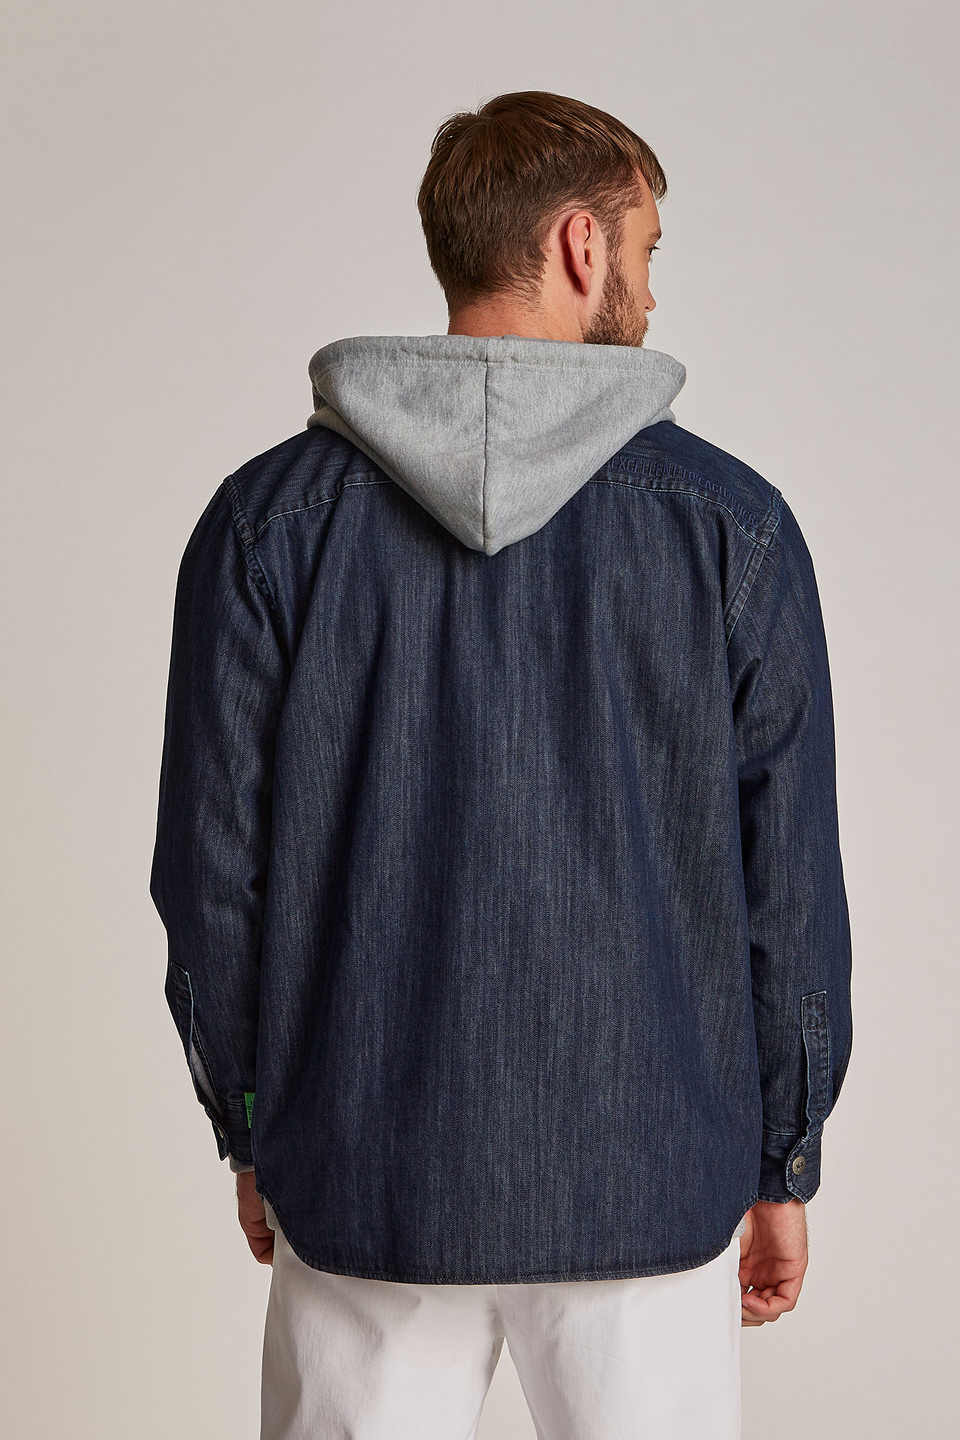 Chaqueta de hombre de algodón 100 % con capucha, modelo oversize | La Martina - Official Online Shop